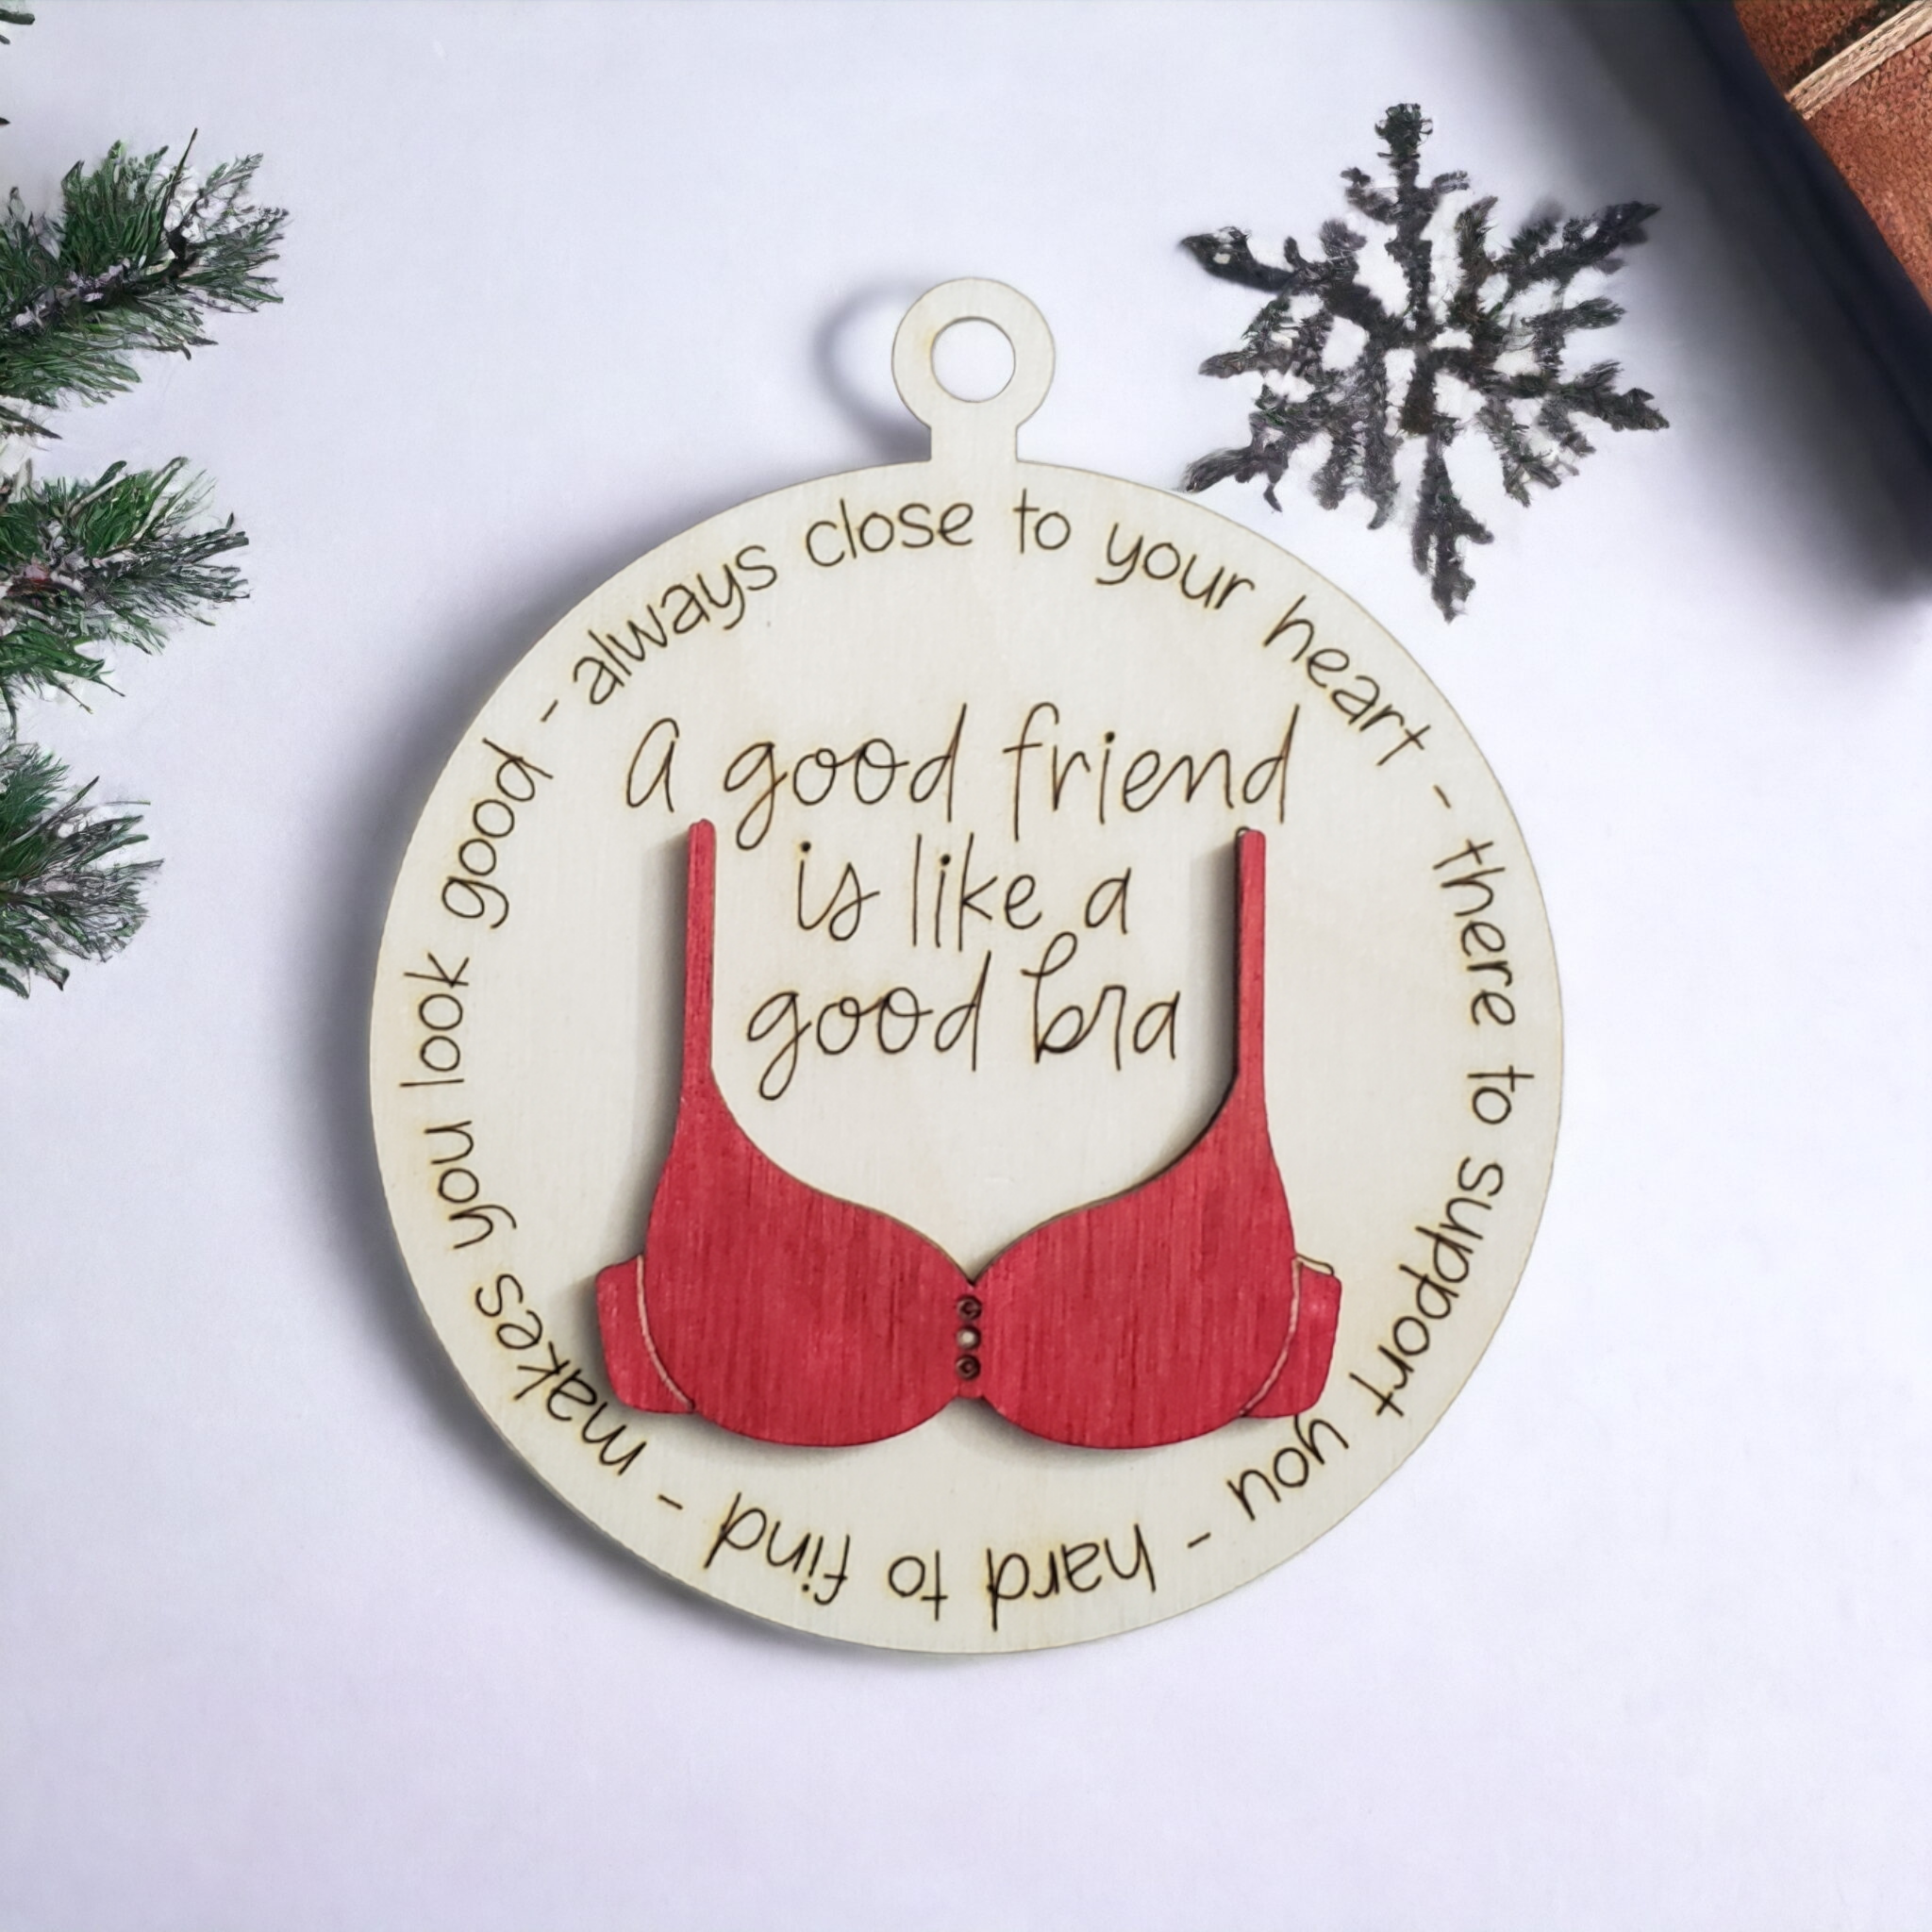 A good friend is like a good bra Christmas Ornament – Wholesale By